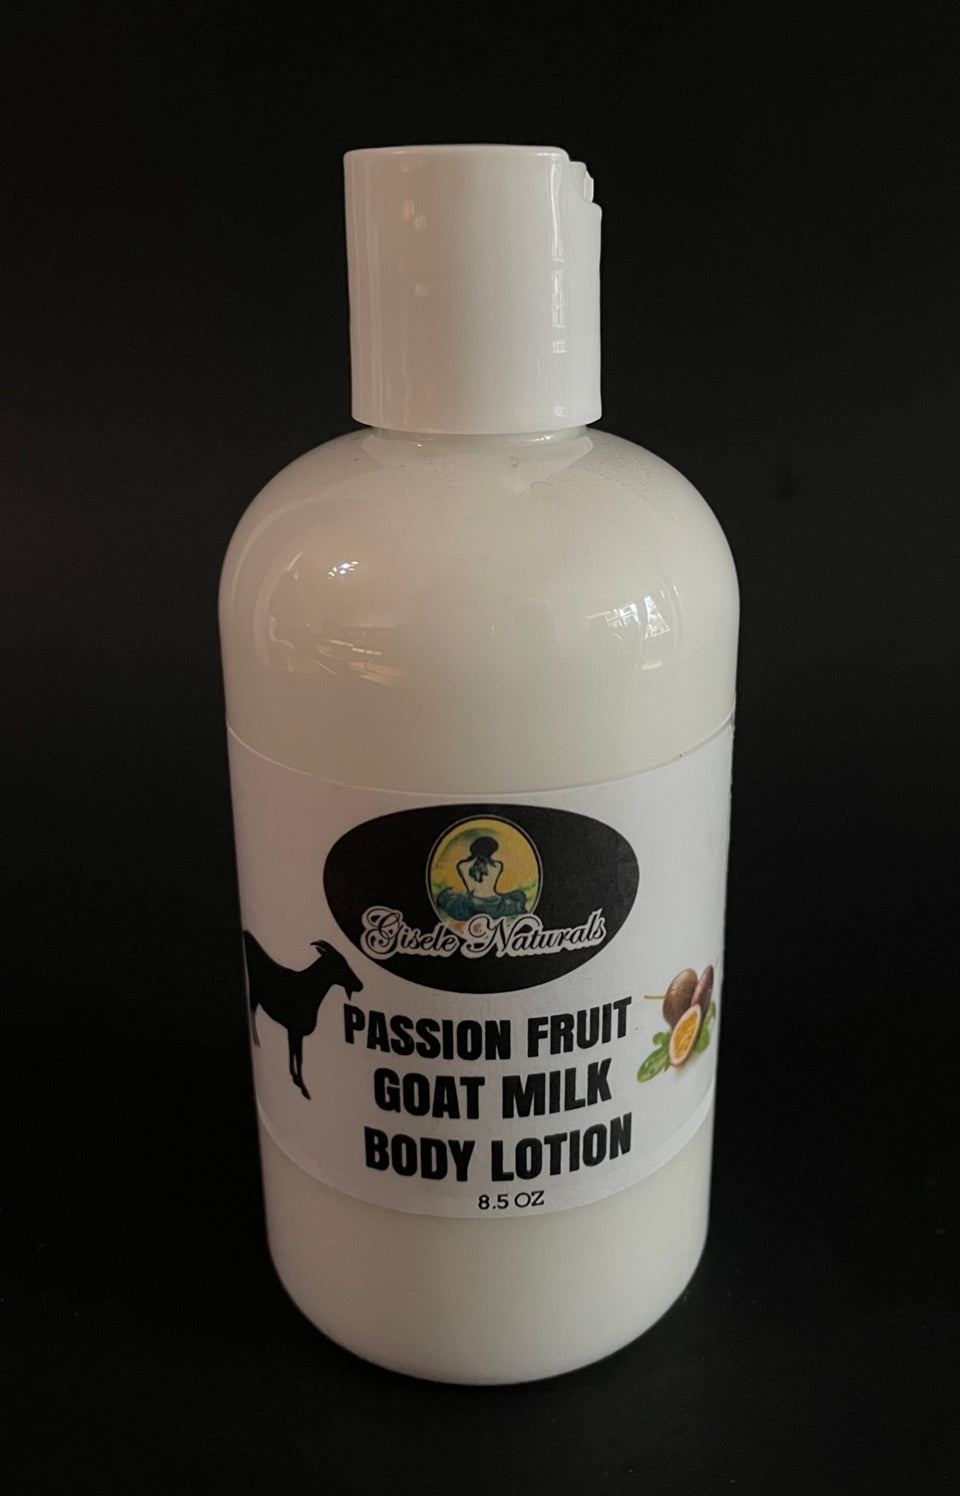 Passion fruit goats milk body lotion